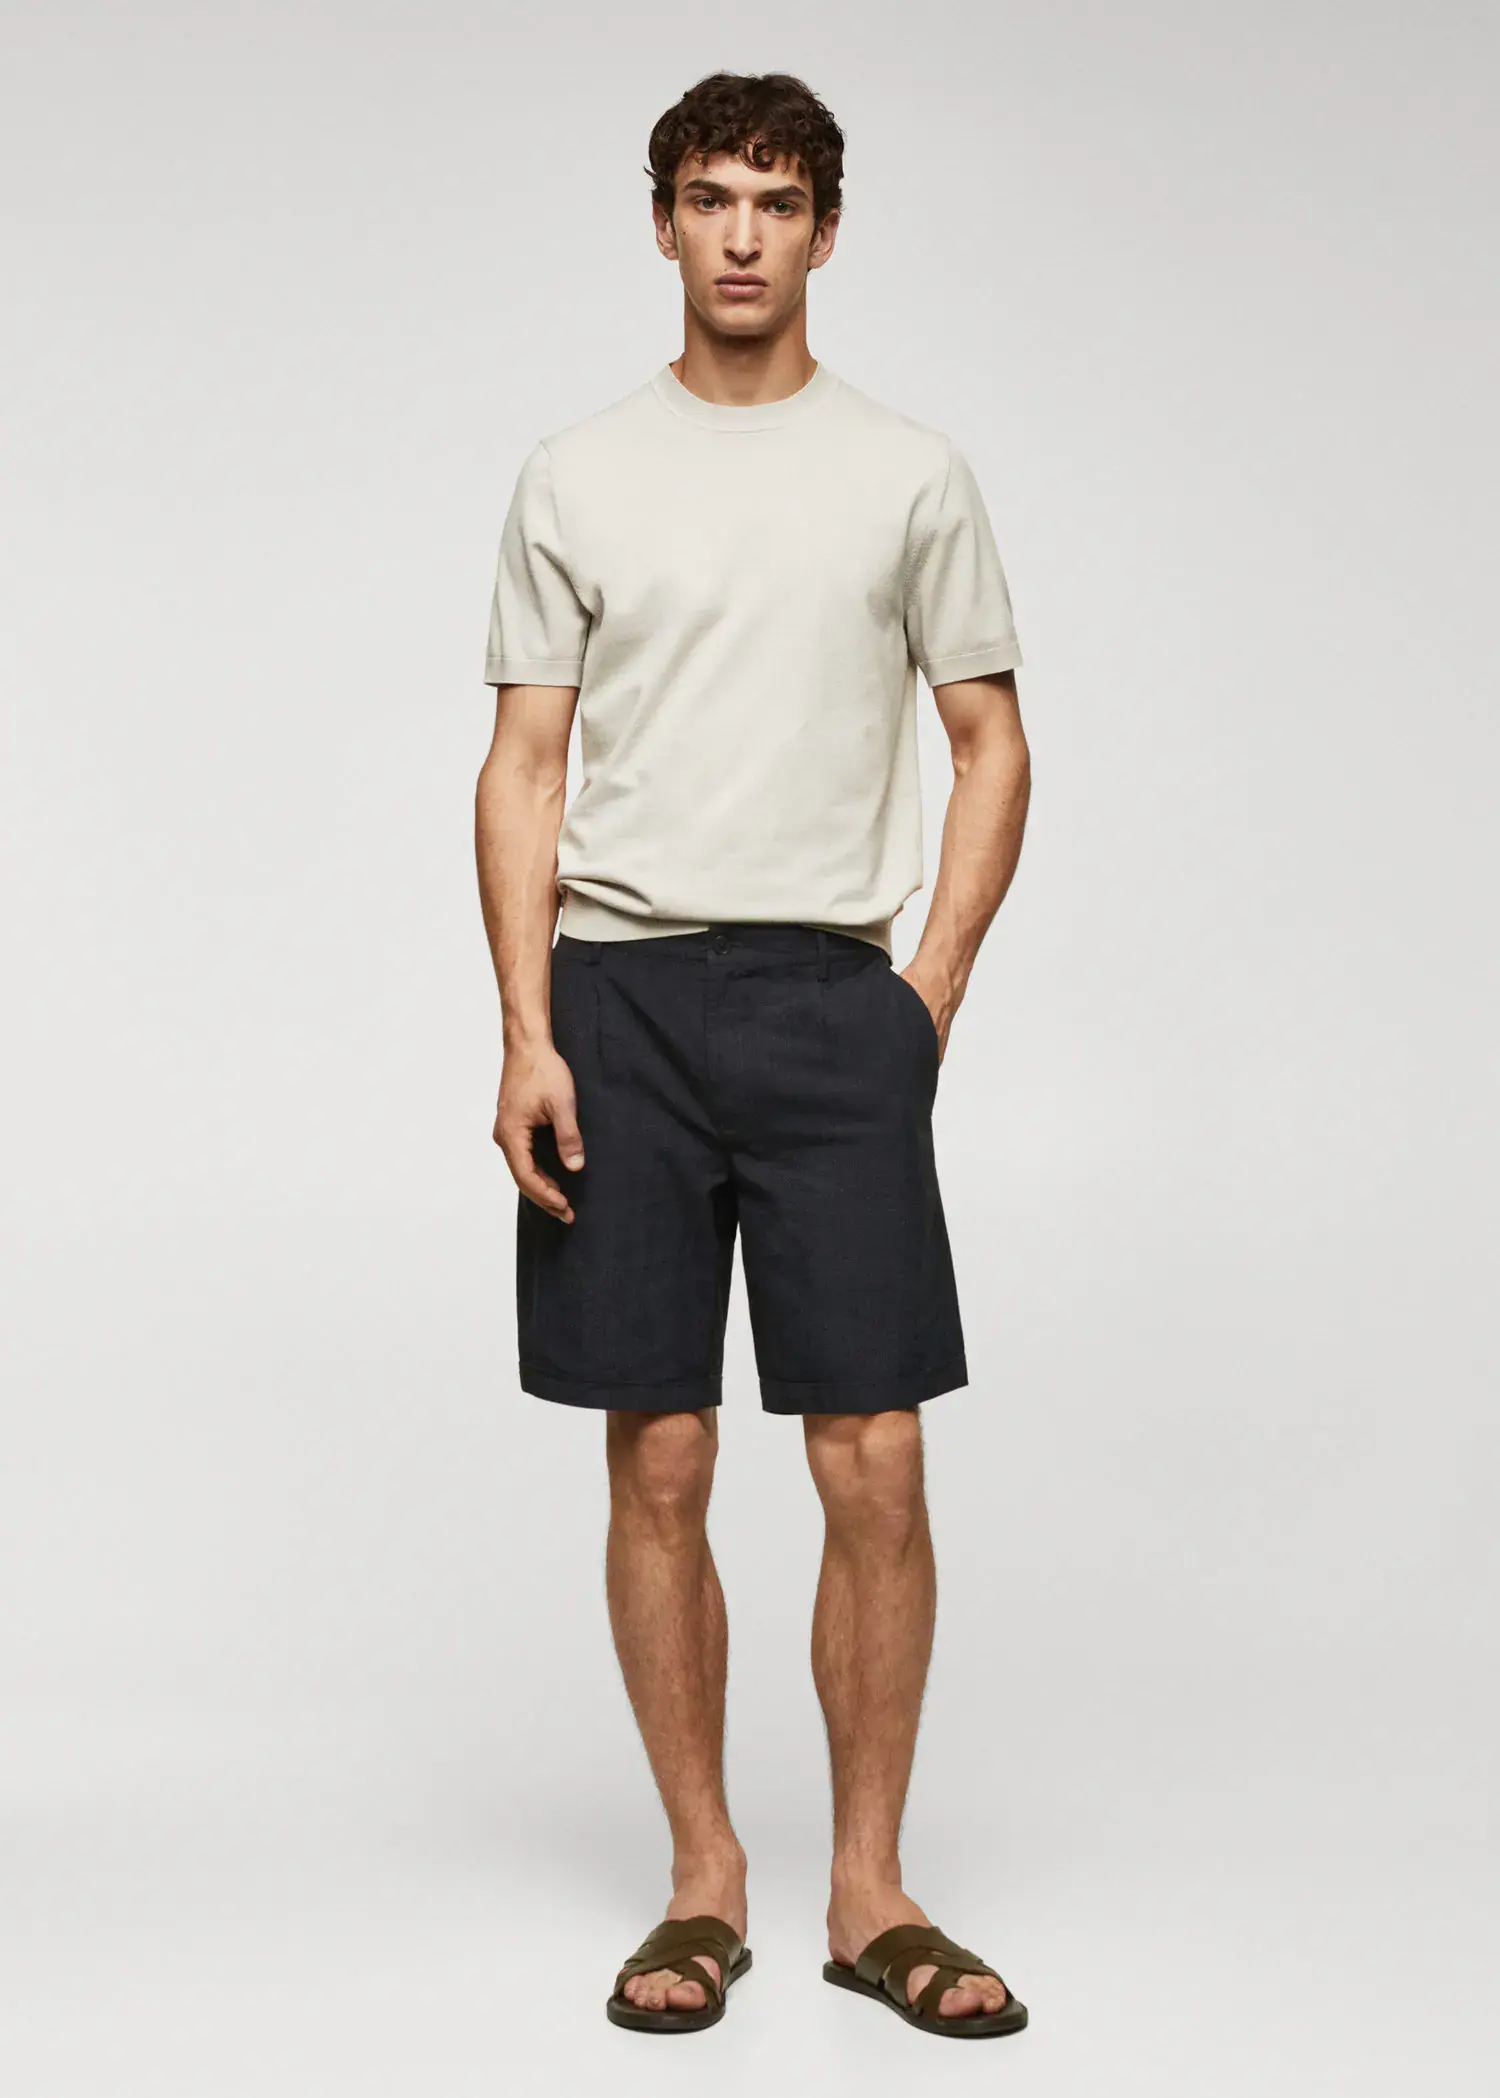 Mango Prince of Wales printed cotton-linen bermuda shorts. a young man wearing black shorts and a white t-shirt. 